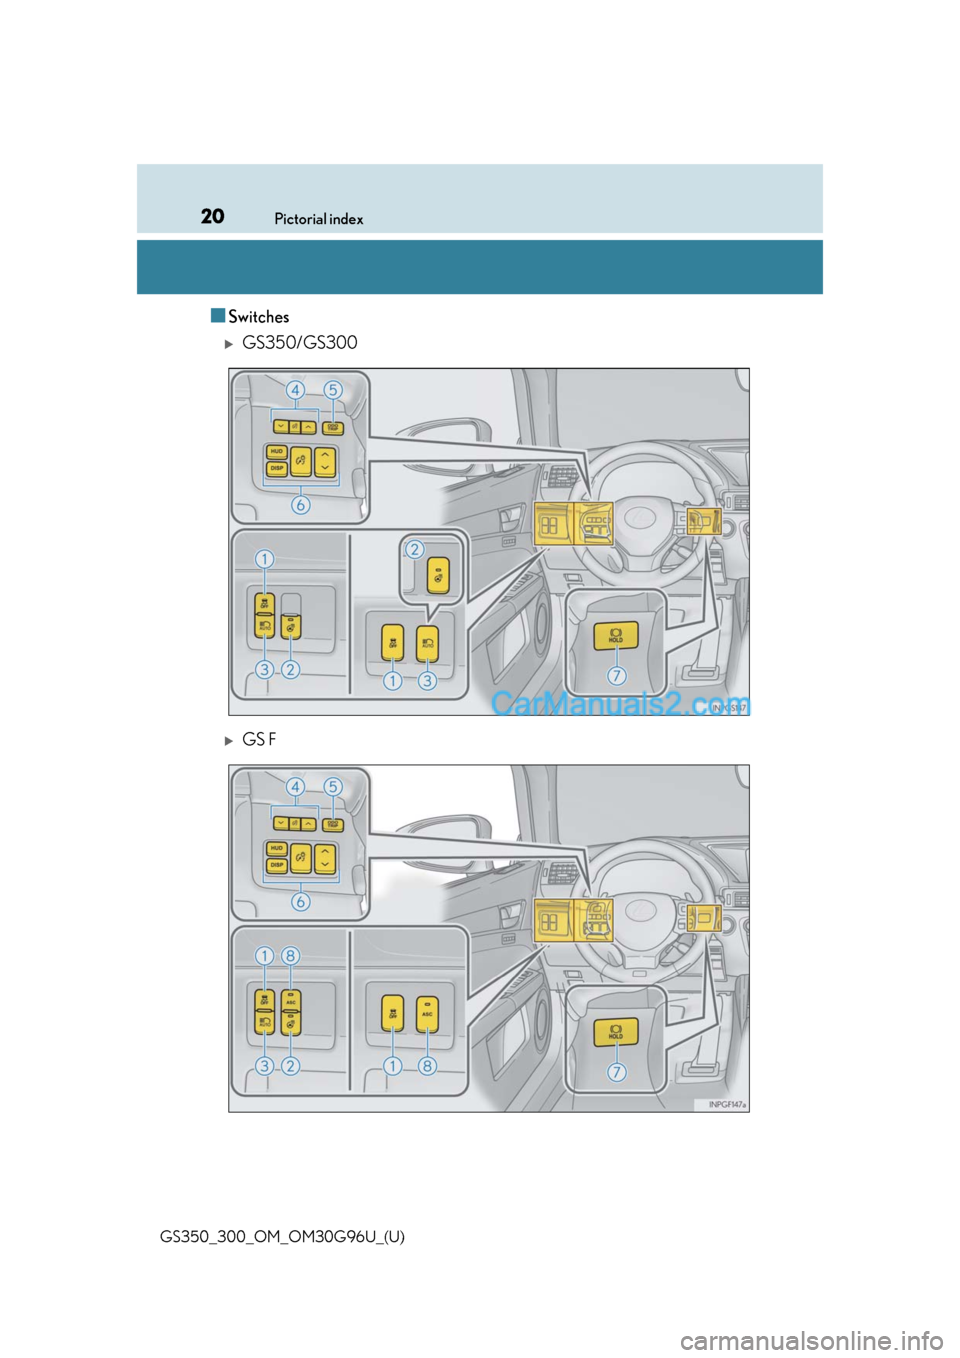 Lexus GS300 2019 User Guide 20Pictorial index
GS350_300_OM_OM30G96U_(U)
■Switches
GS350/GS300
GS F  